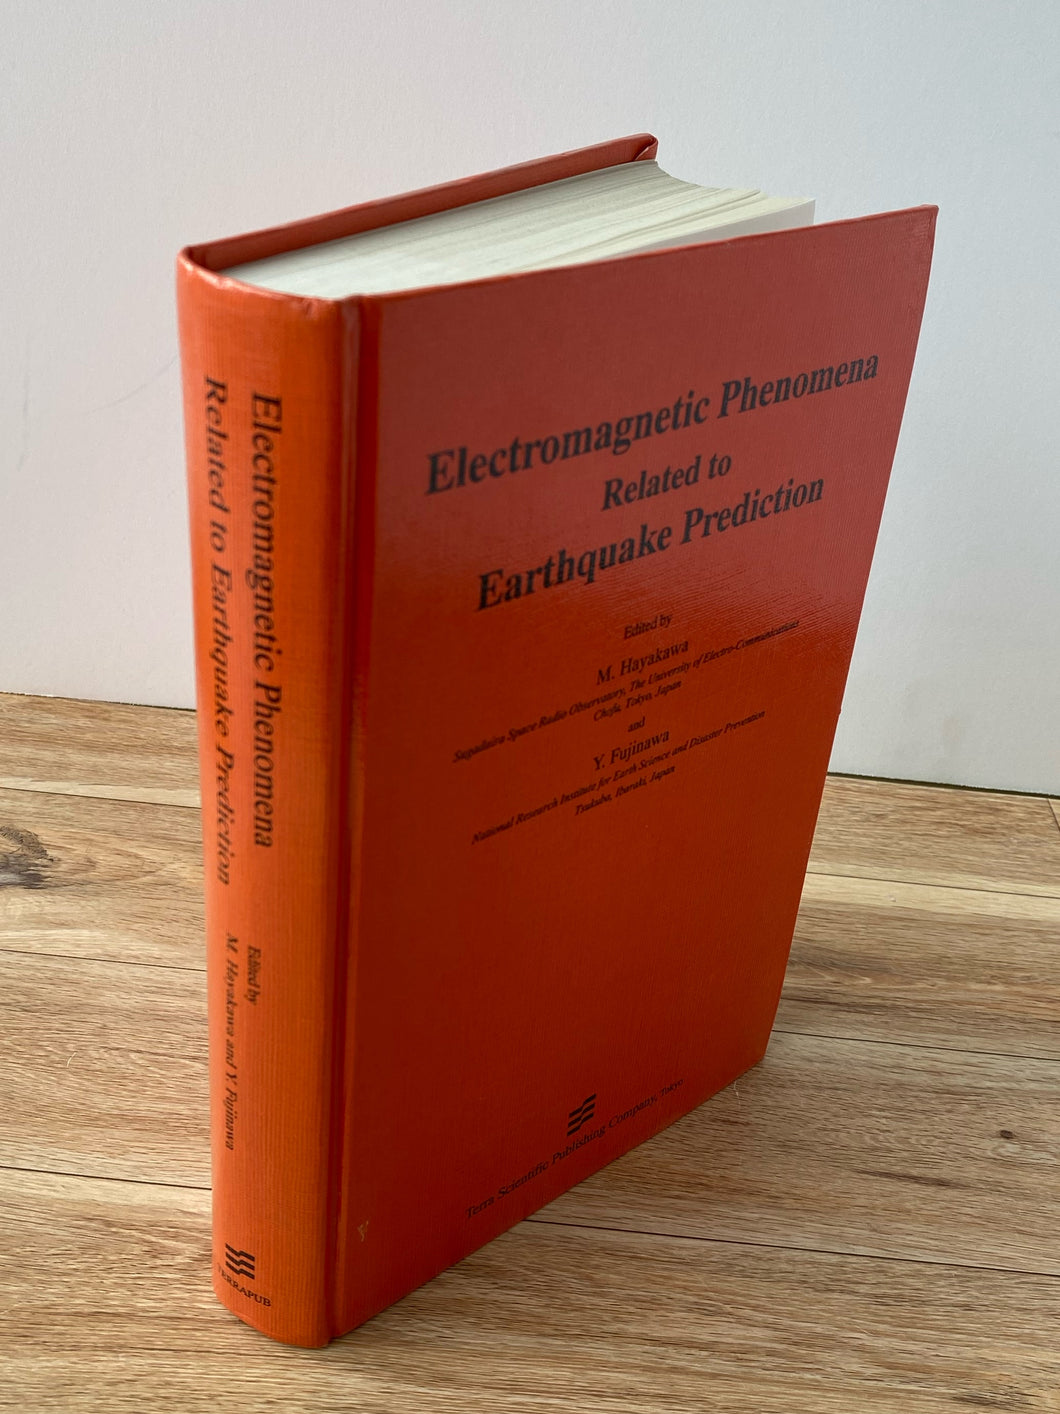 Electromagnetic Phenomena Related to Earthquake Prediction